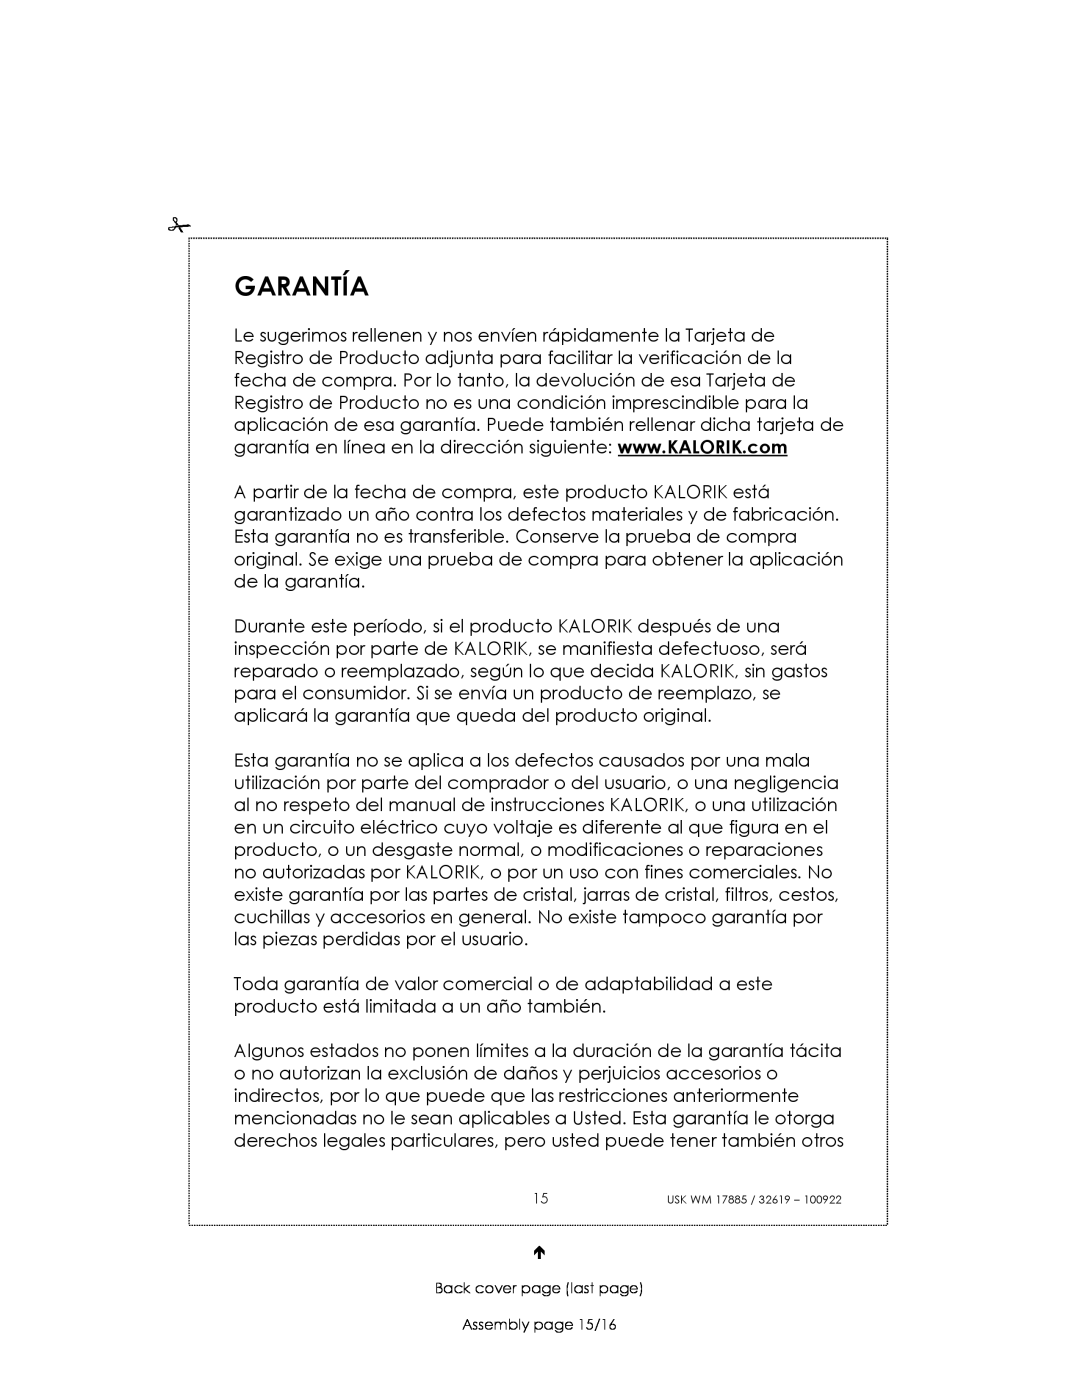 Kalorik usk wm 17885, usk wm 32619 manual Garantía, Back cover page last page Assembly page 15/16 